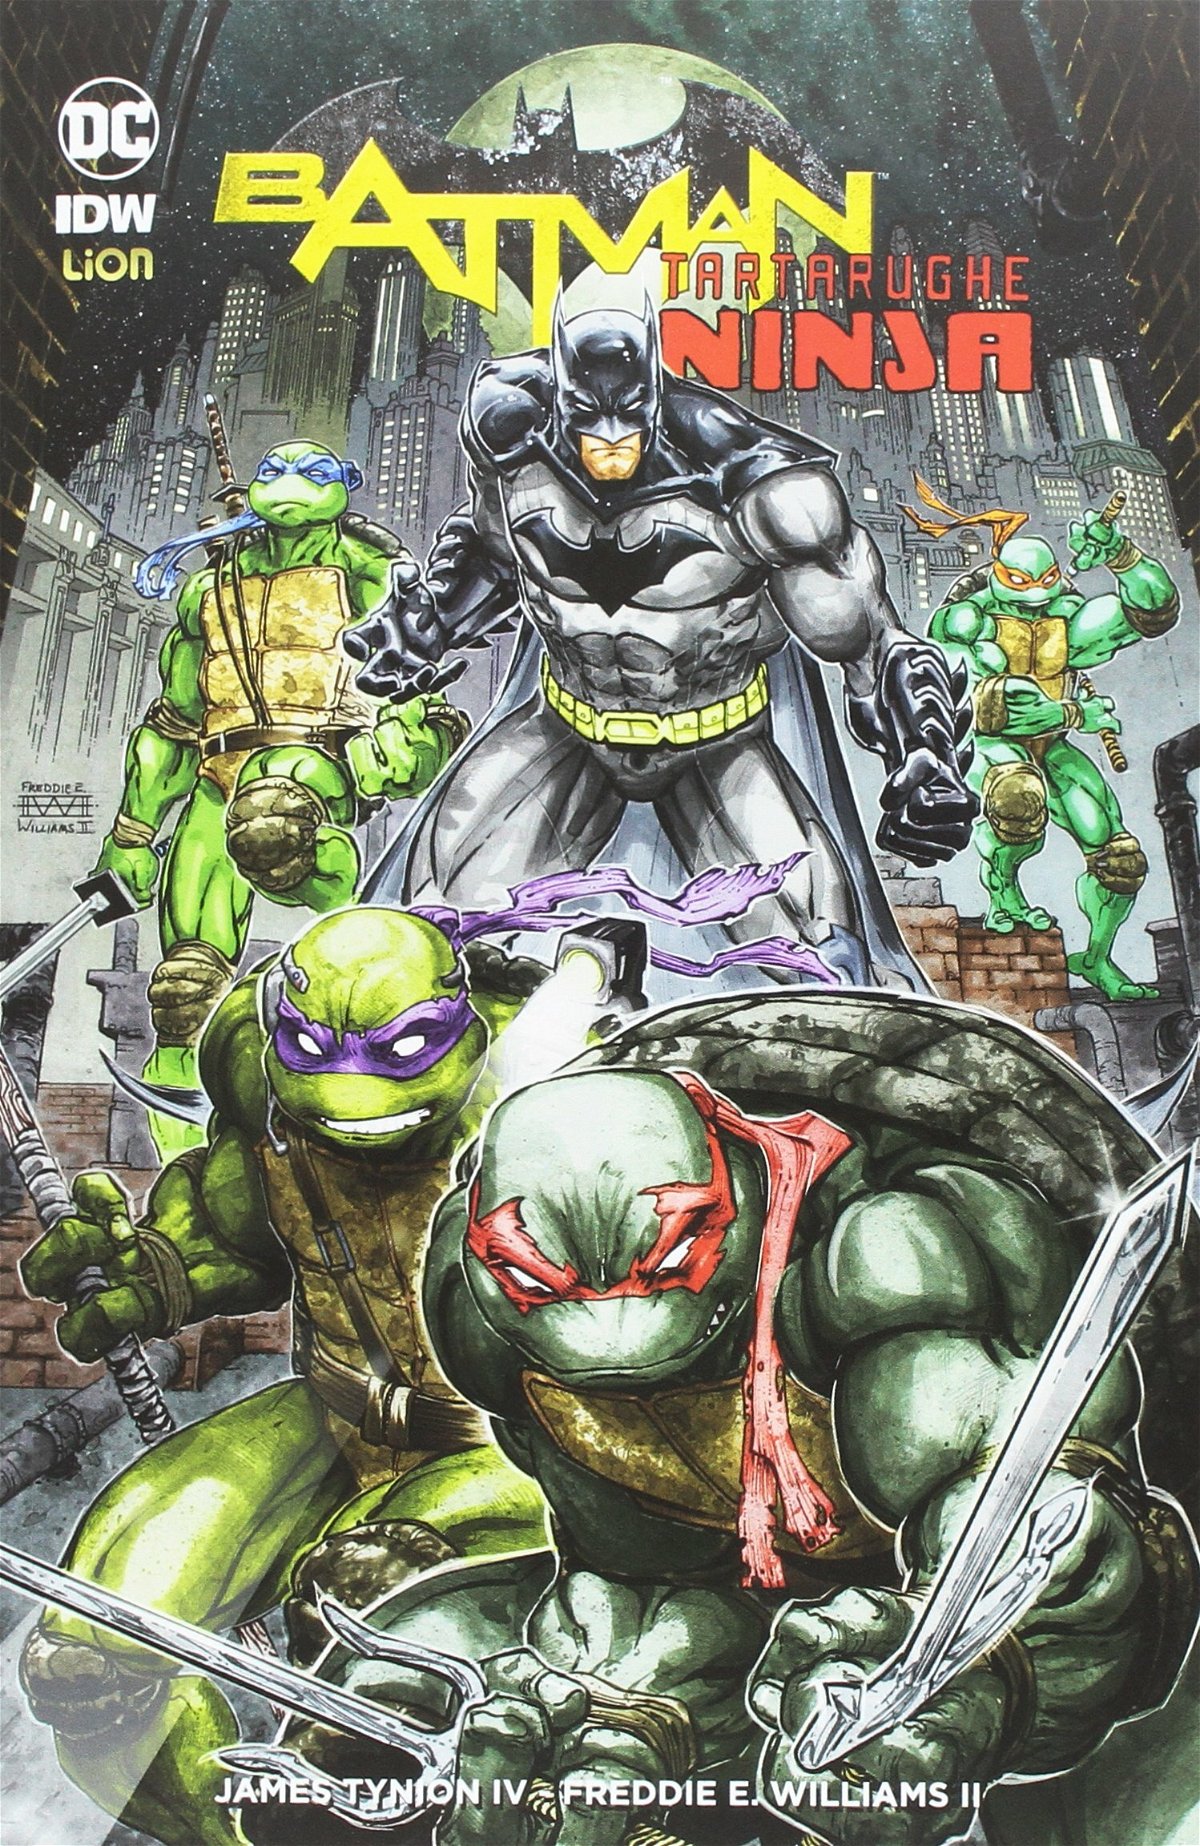 La copertina del fumetto Batman/Tartarughe Ninja